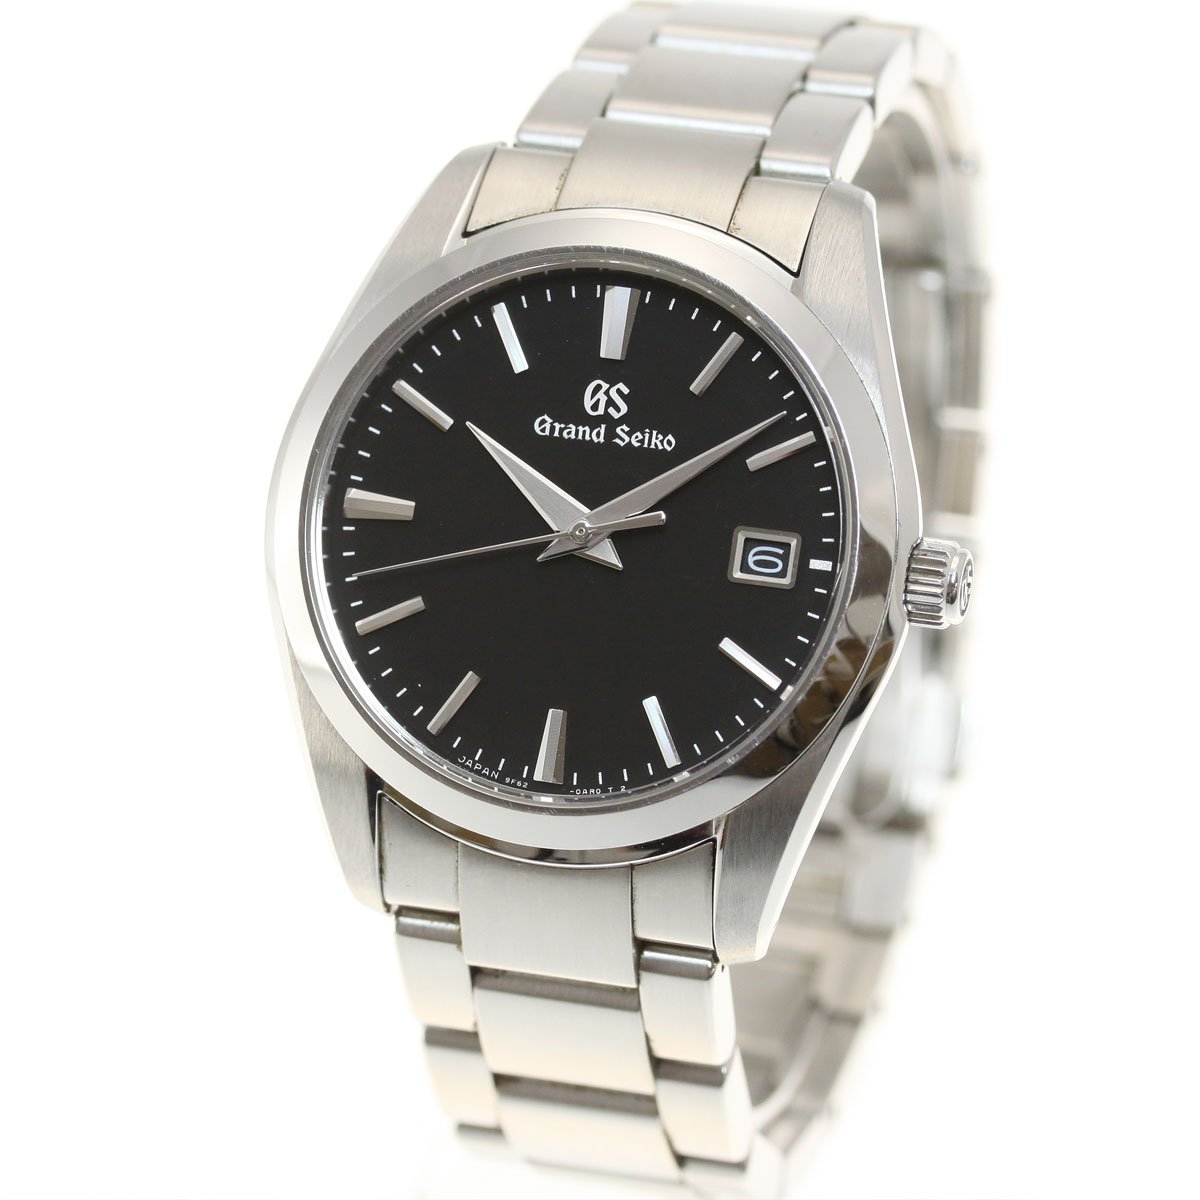 Mua Grand Seiko Men's Wristwatch SBGX261 trên Amazon Nhật chính hãng 2023 |  Giaonhan247